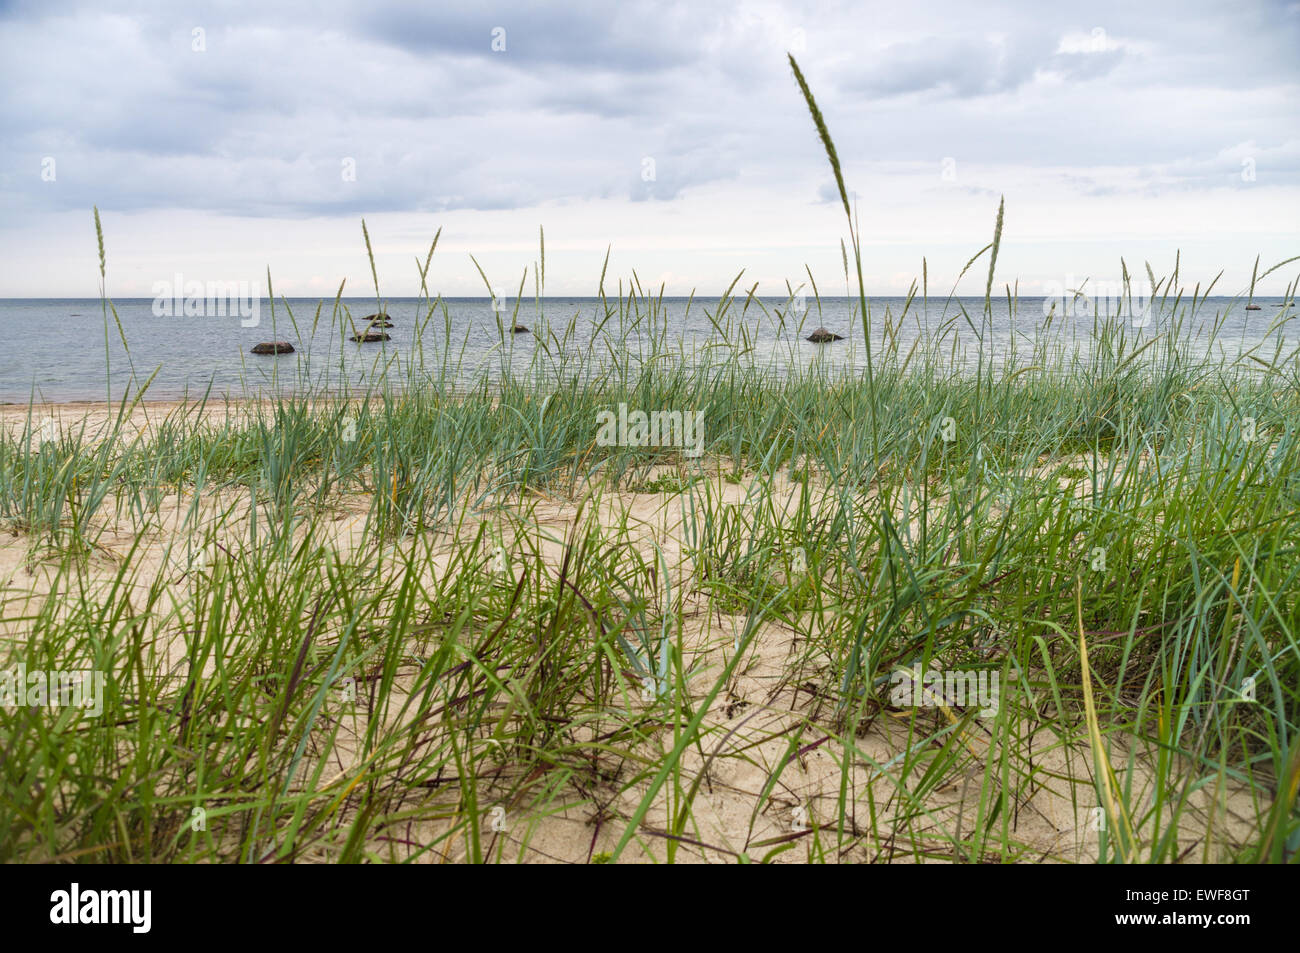 Sedge grass on sandy beach of Baltic sea Stock Photo